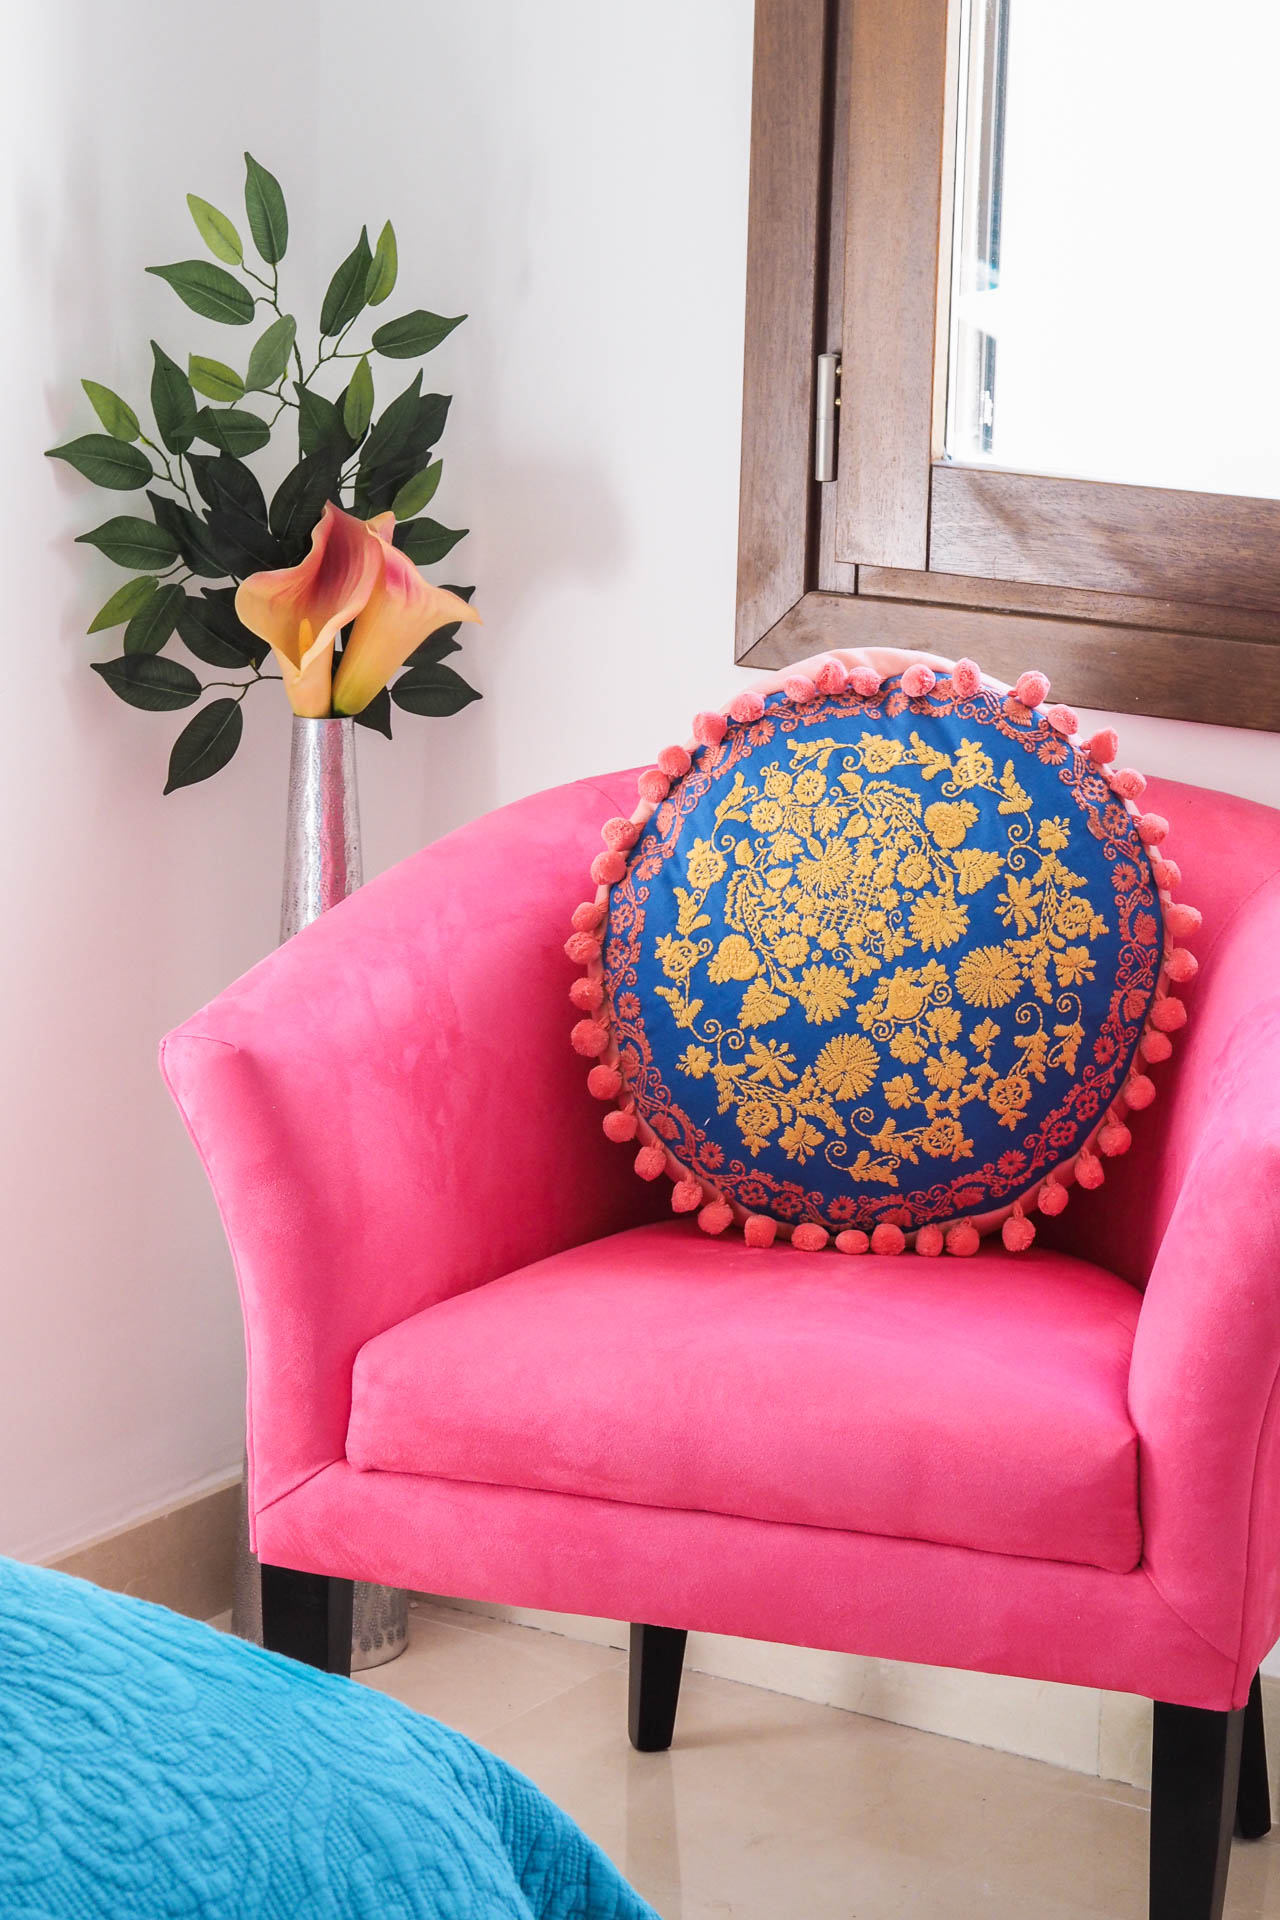 spanish bedroom pink chair interiors